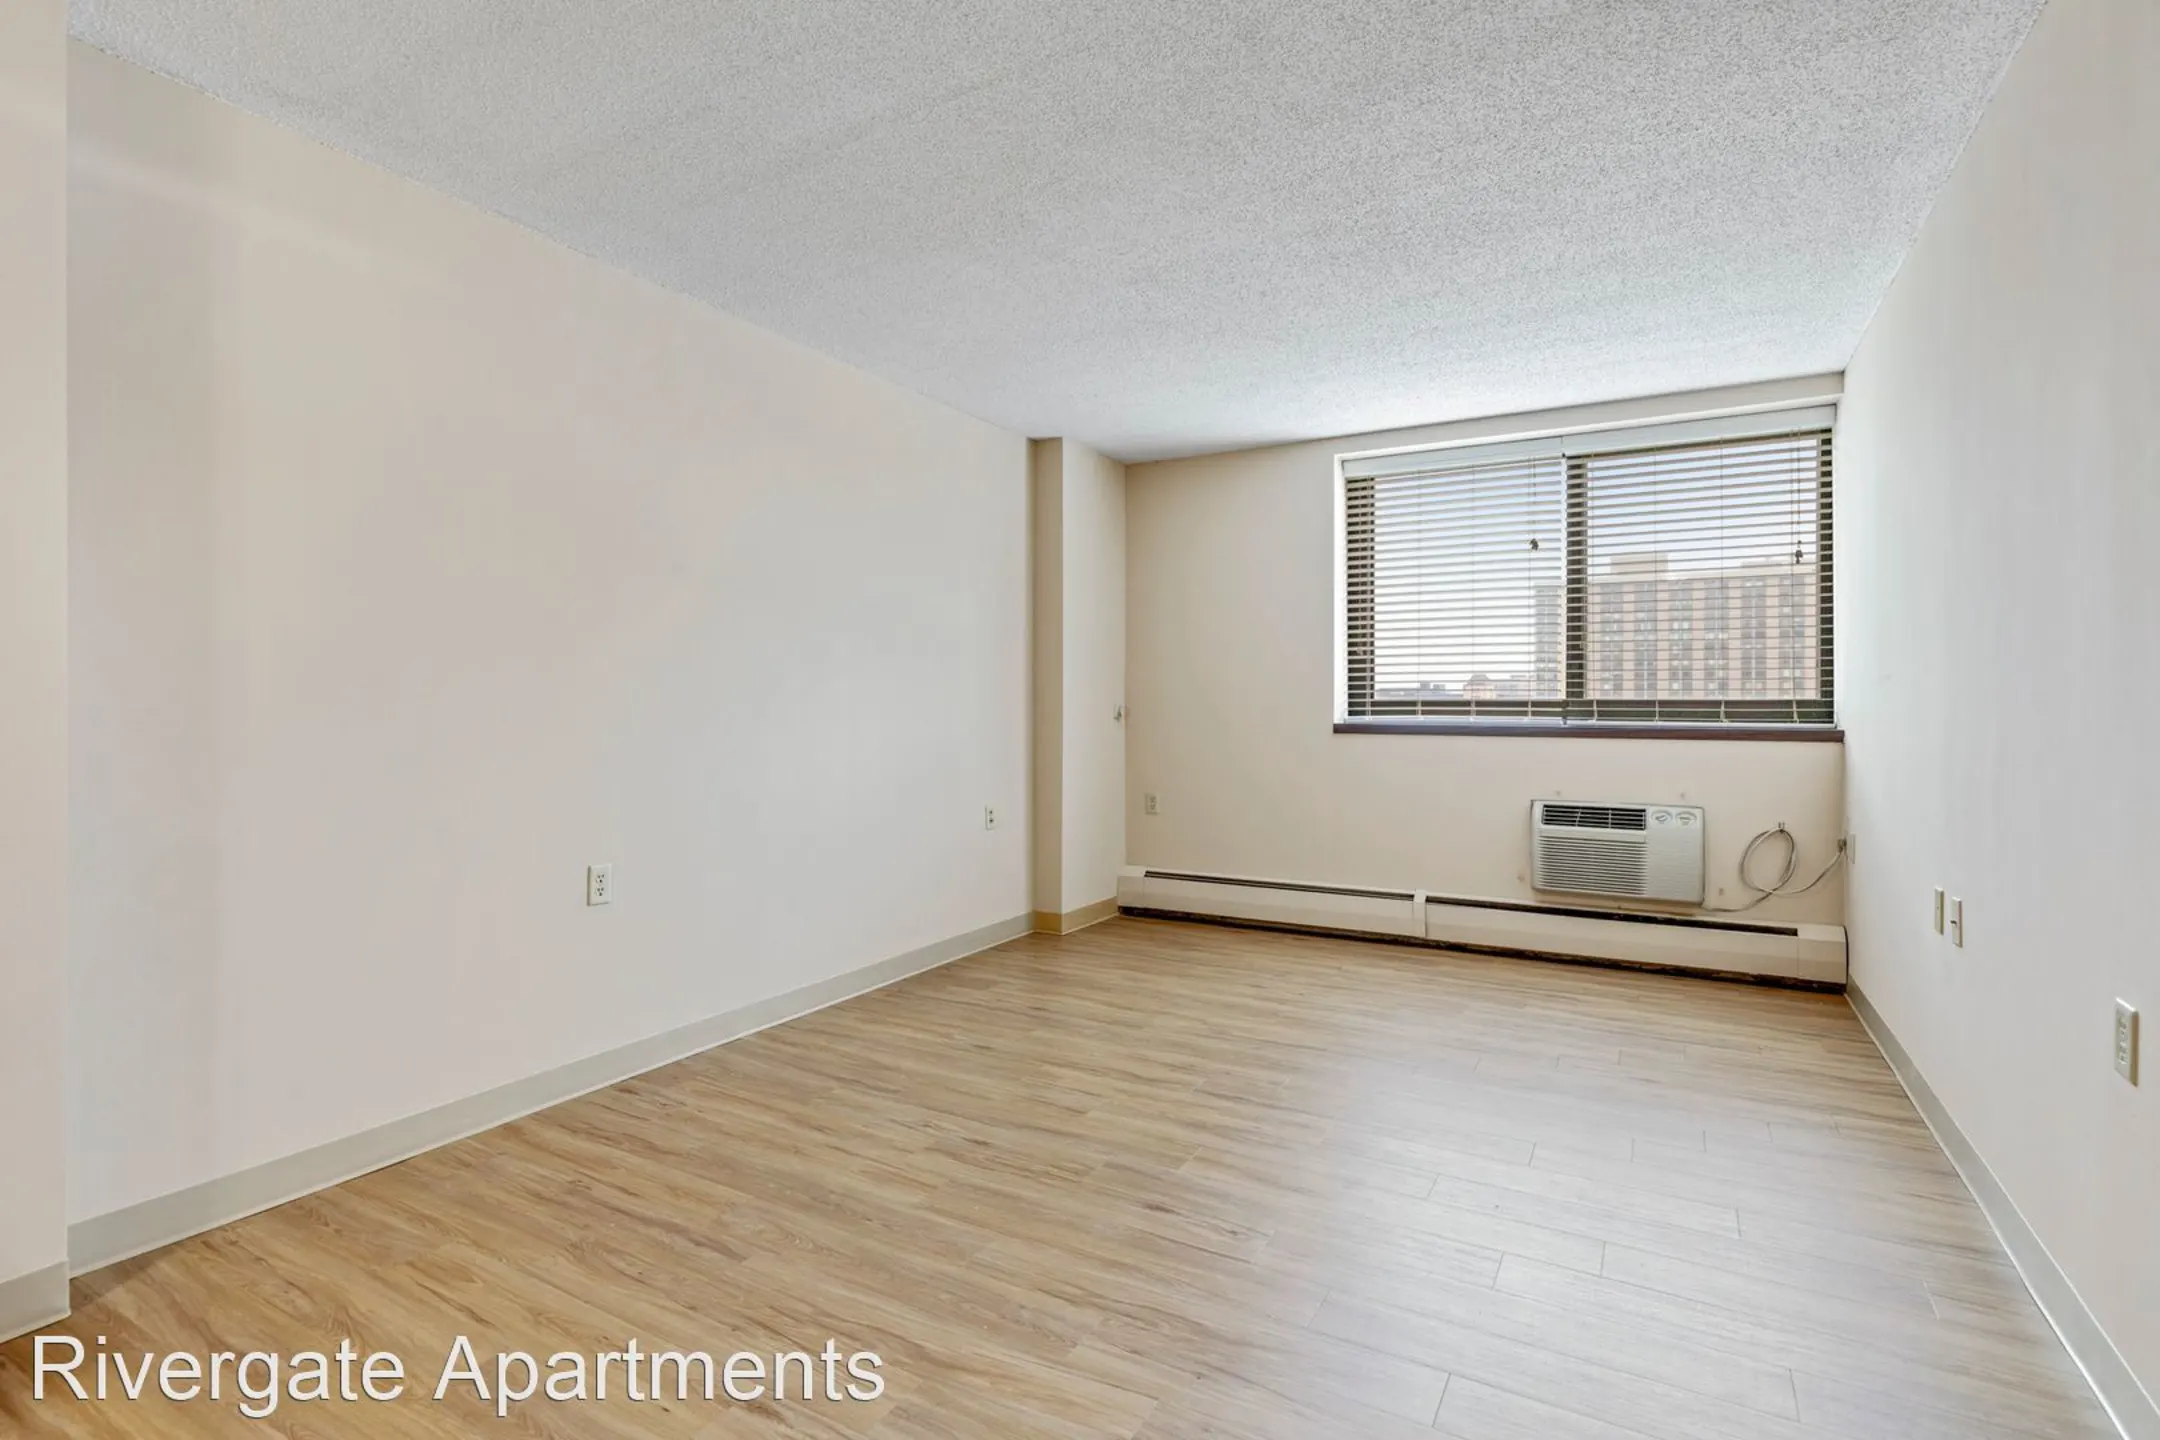 Living Room - Rivergate Apartments - Minneapolis, MN